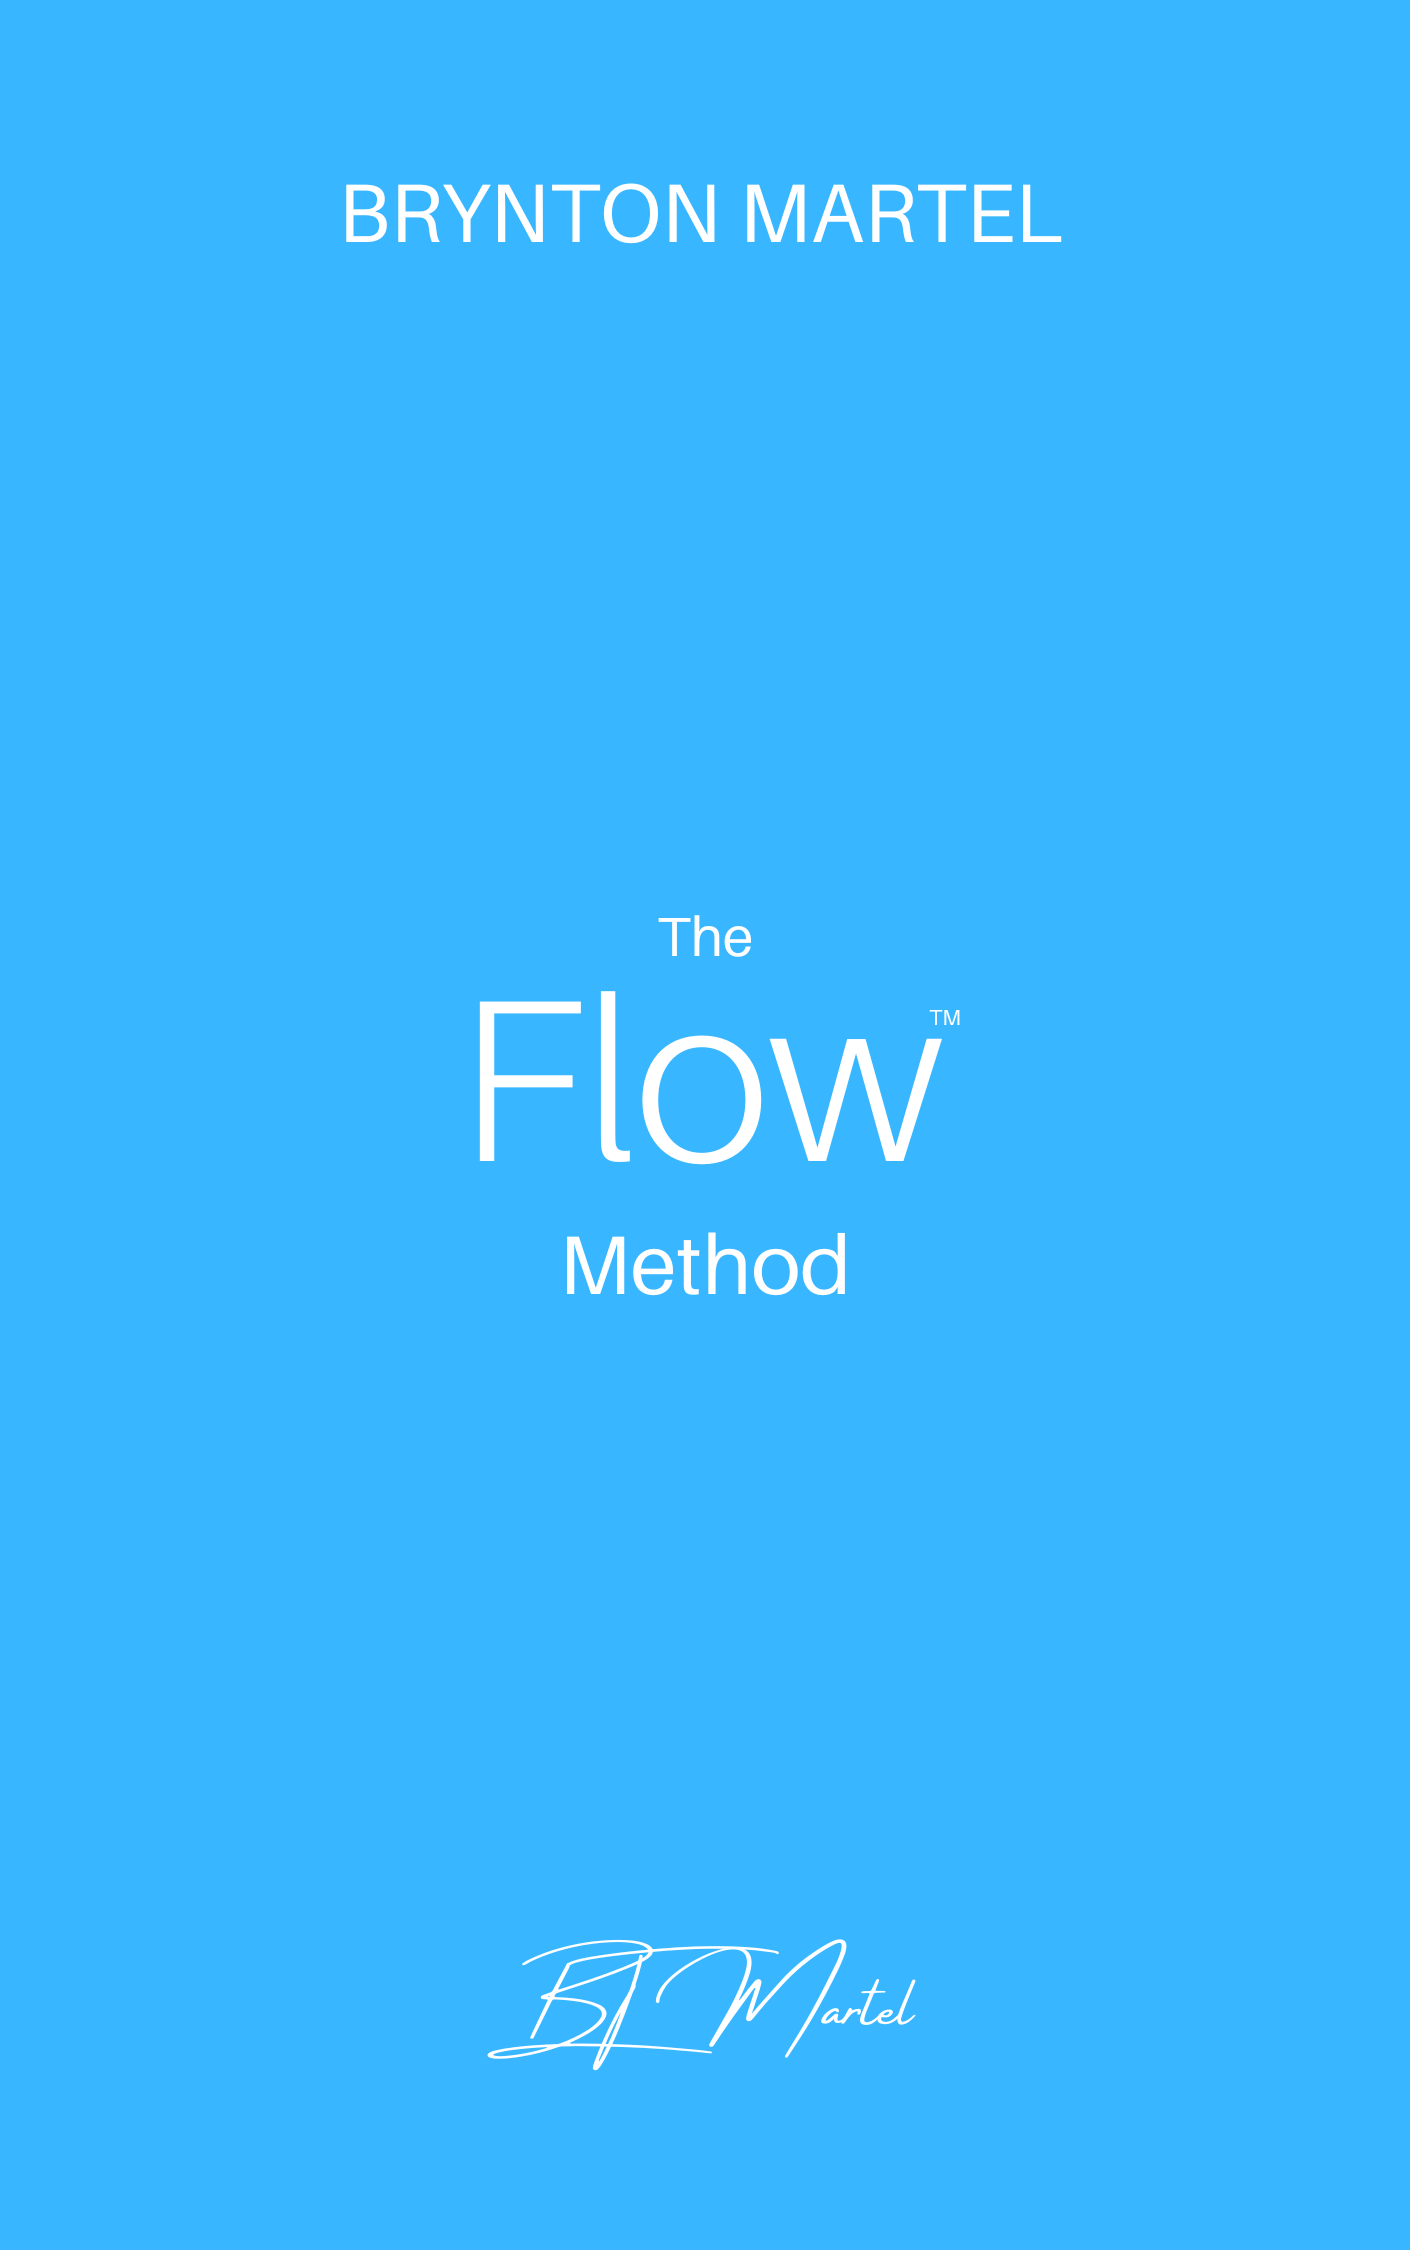 Flow Method by BT Martel